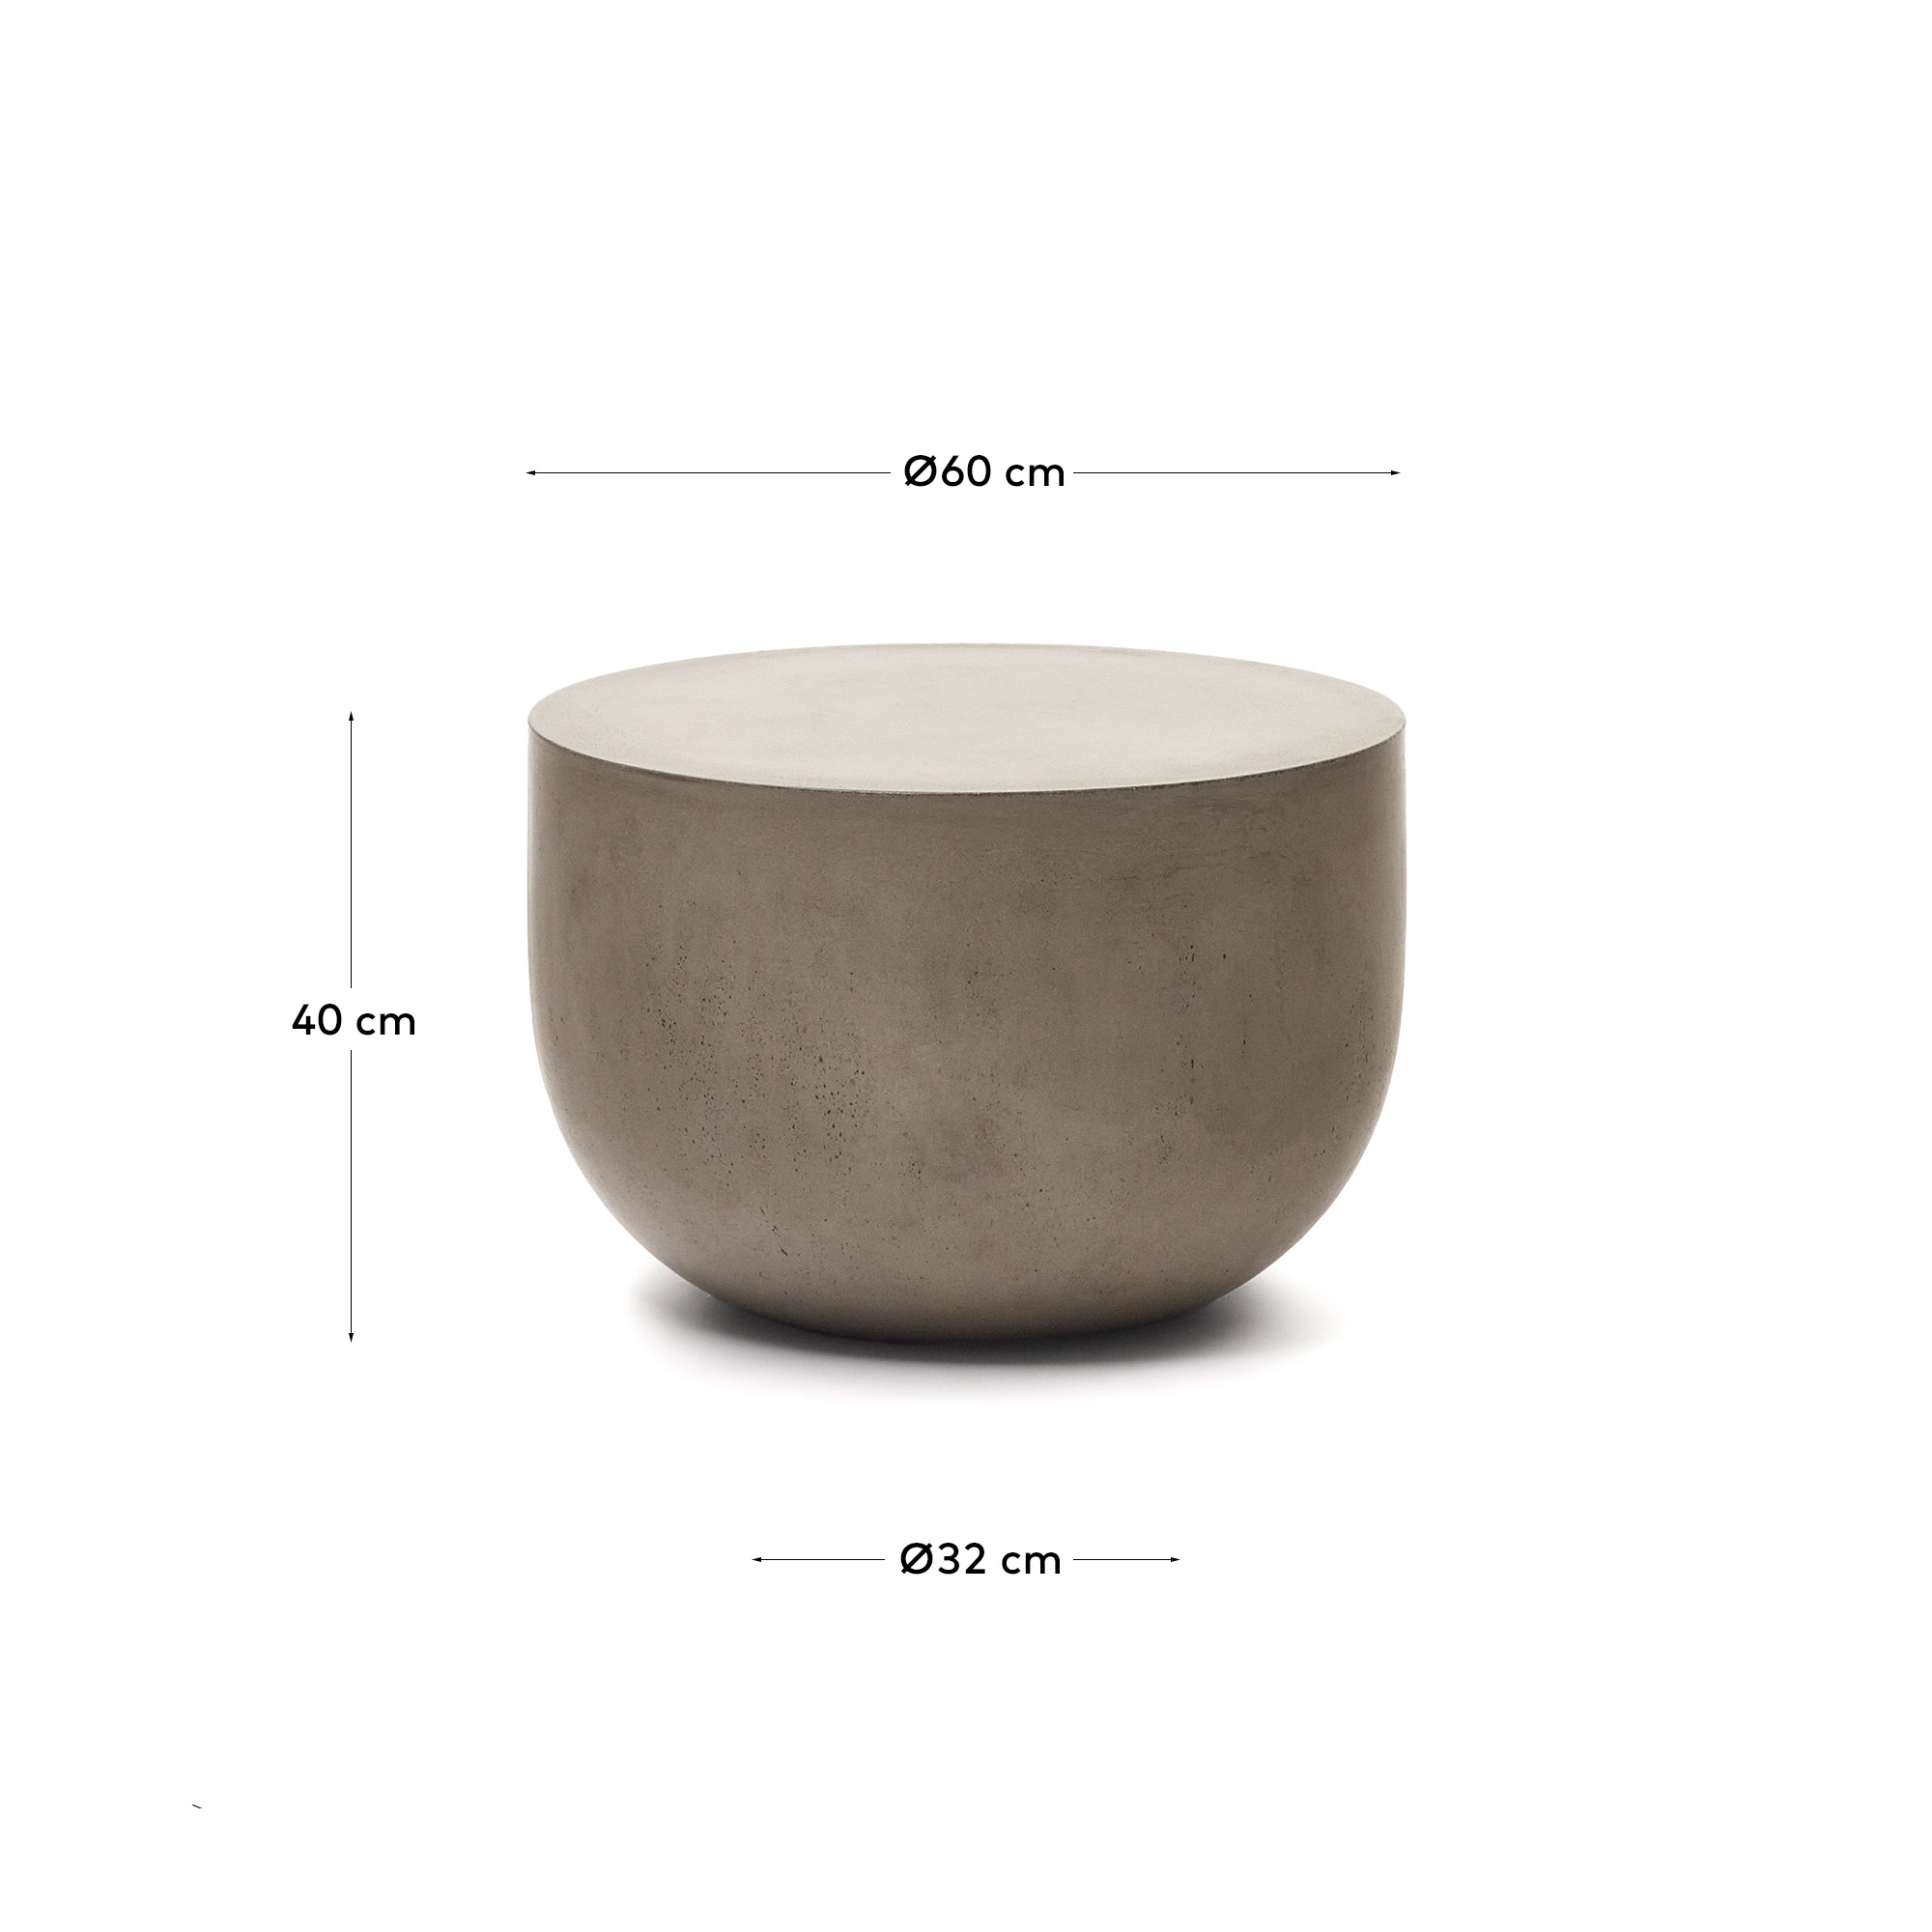 Garbet cement coffee table, Ø 60 cm - sizes